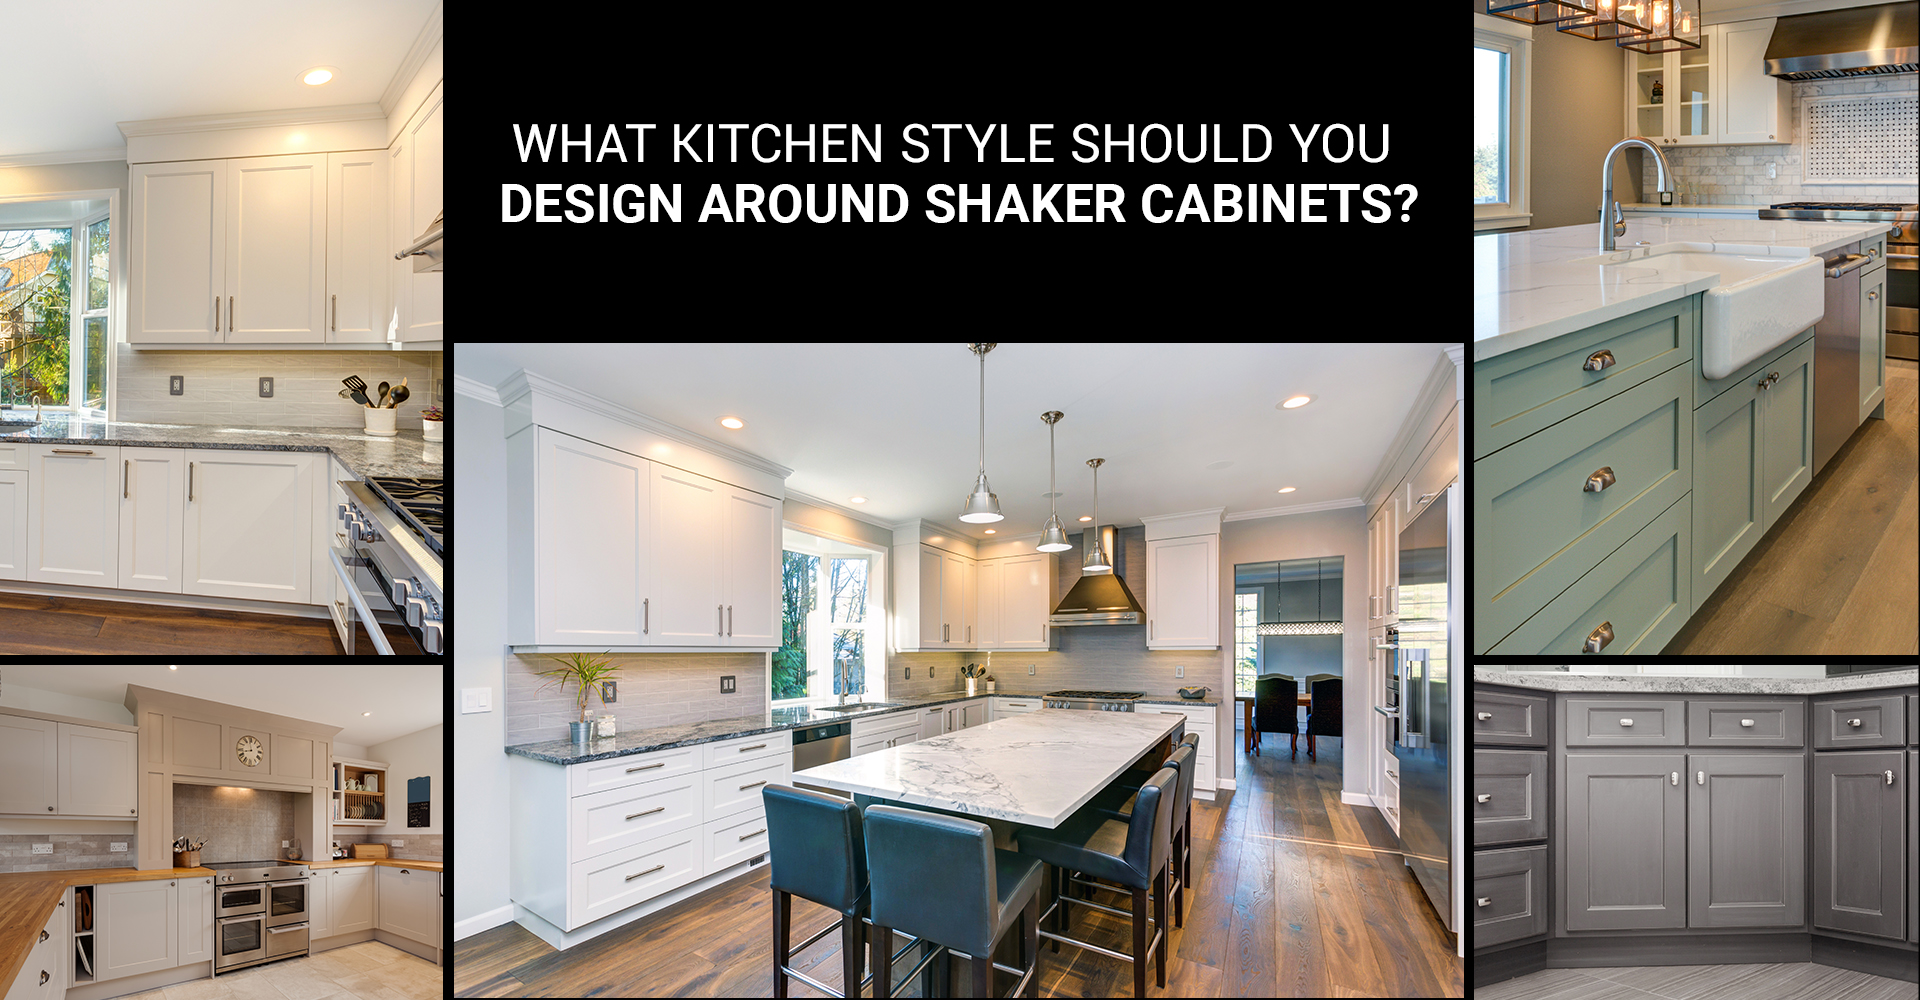 Design Around Shaker Cabinets